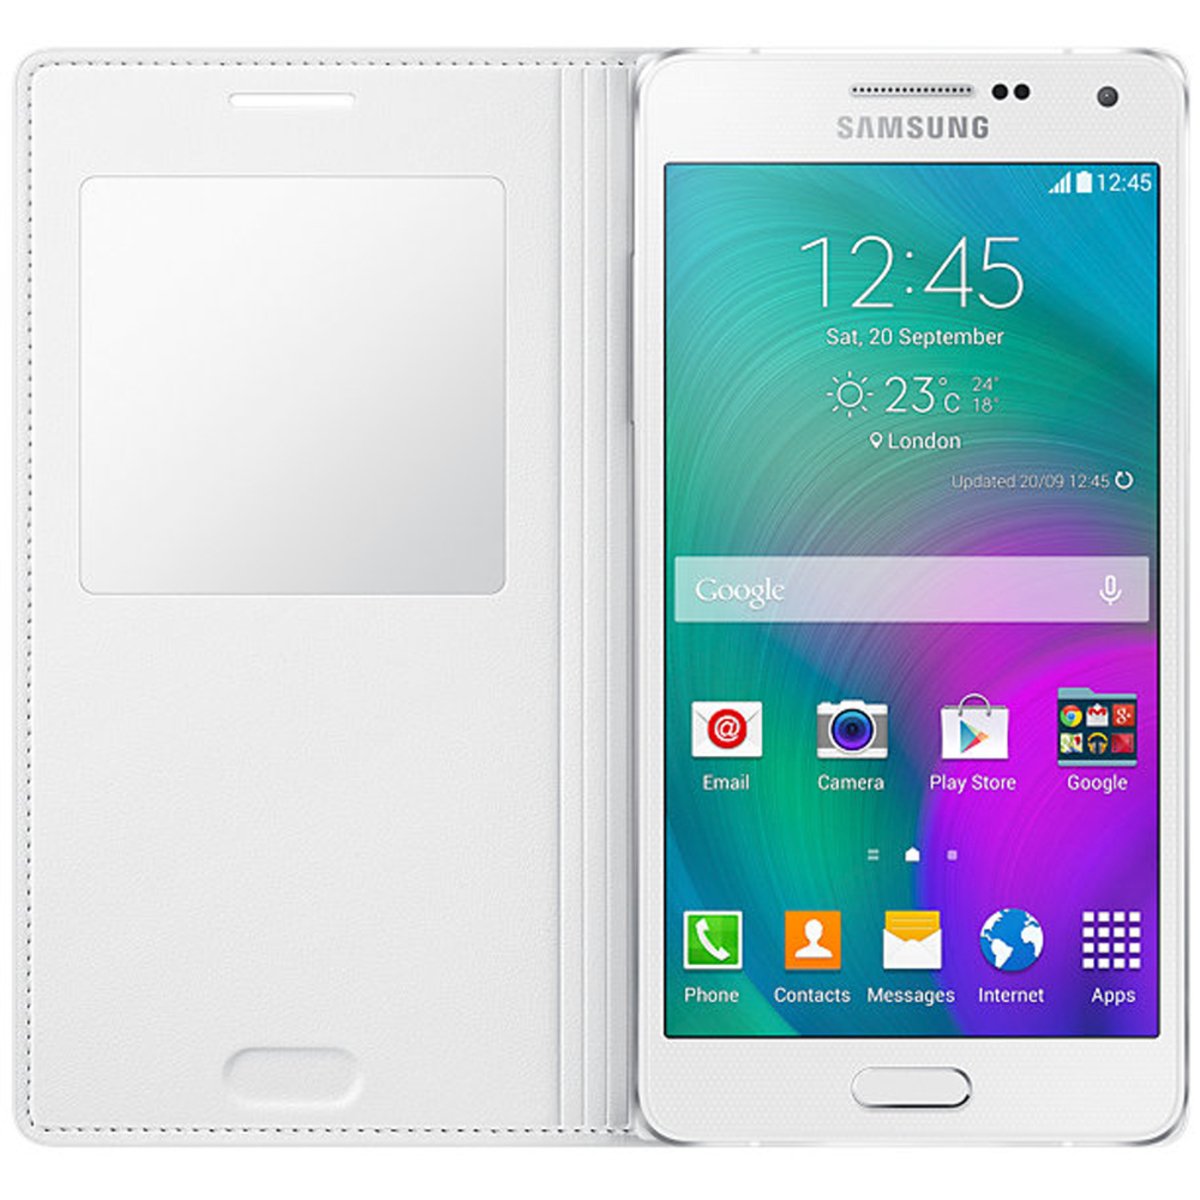 Samsung Galaxy A5 S-View Case White